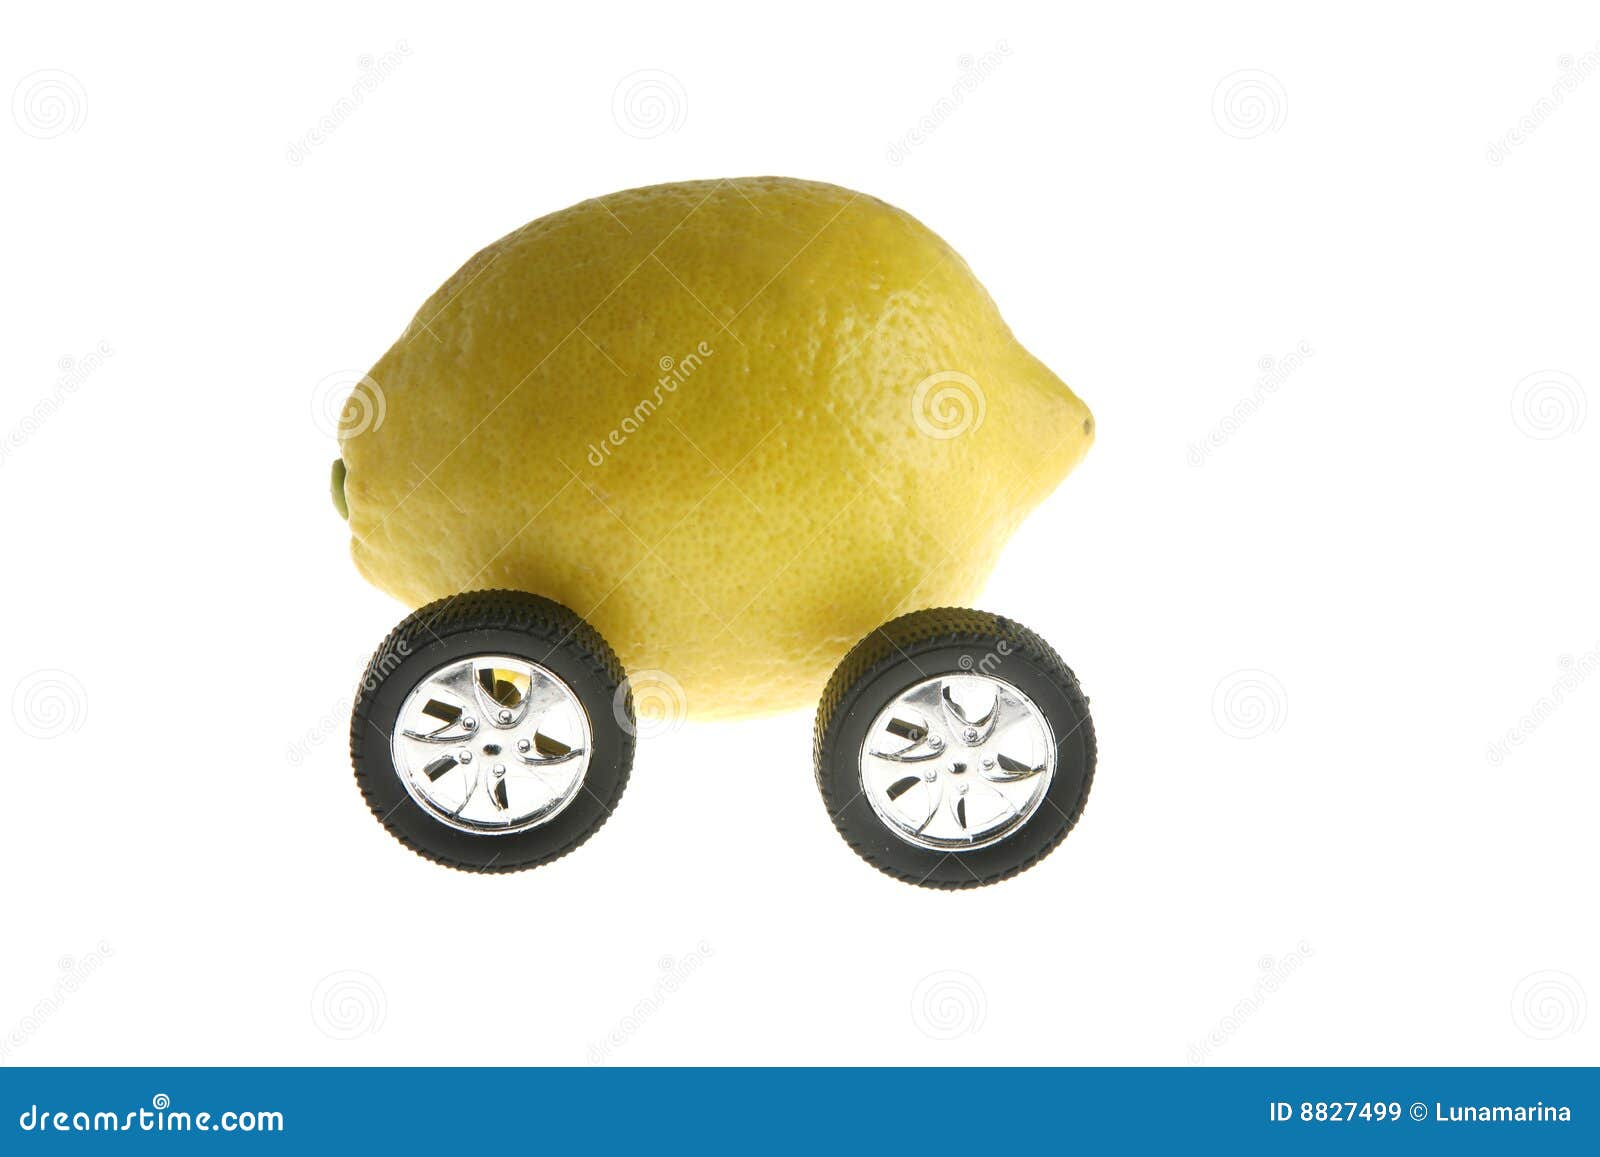 ecological transport metaphor, lemon and wheels